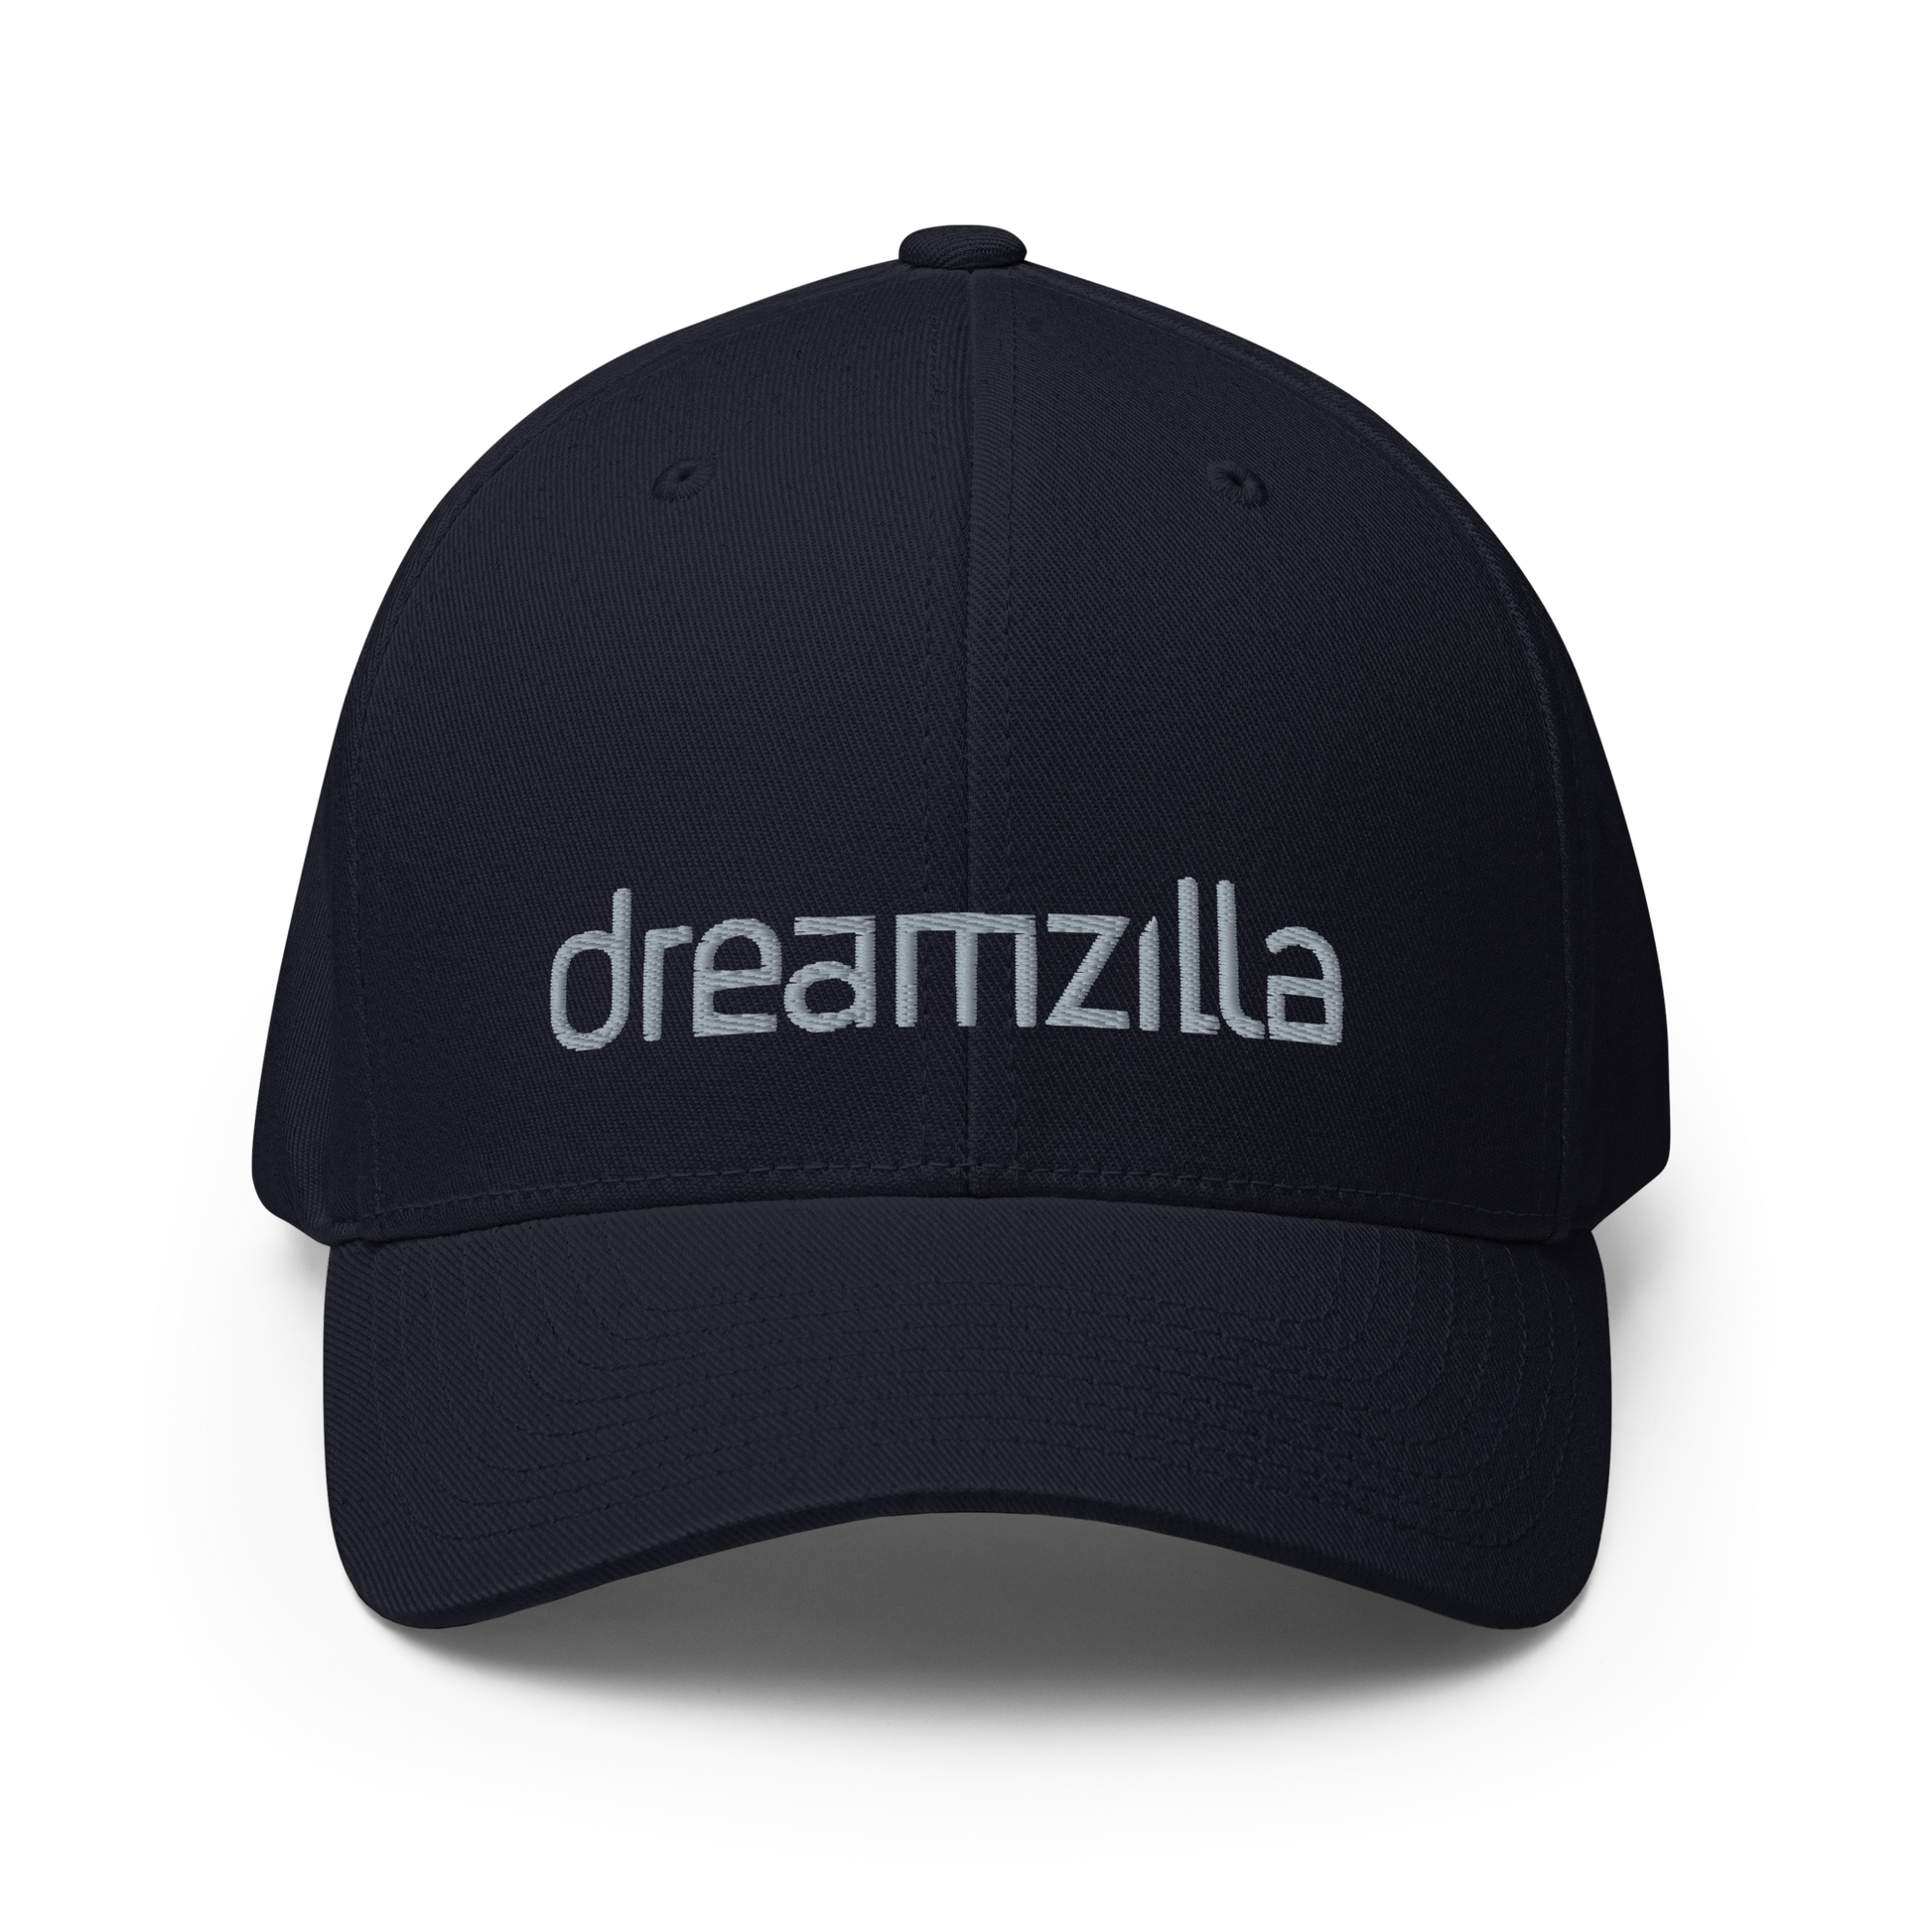 Dreamzilla Flexfit Cap in Dark Navy